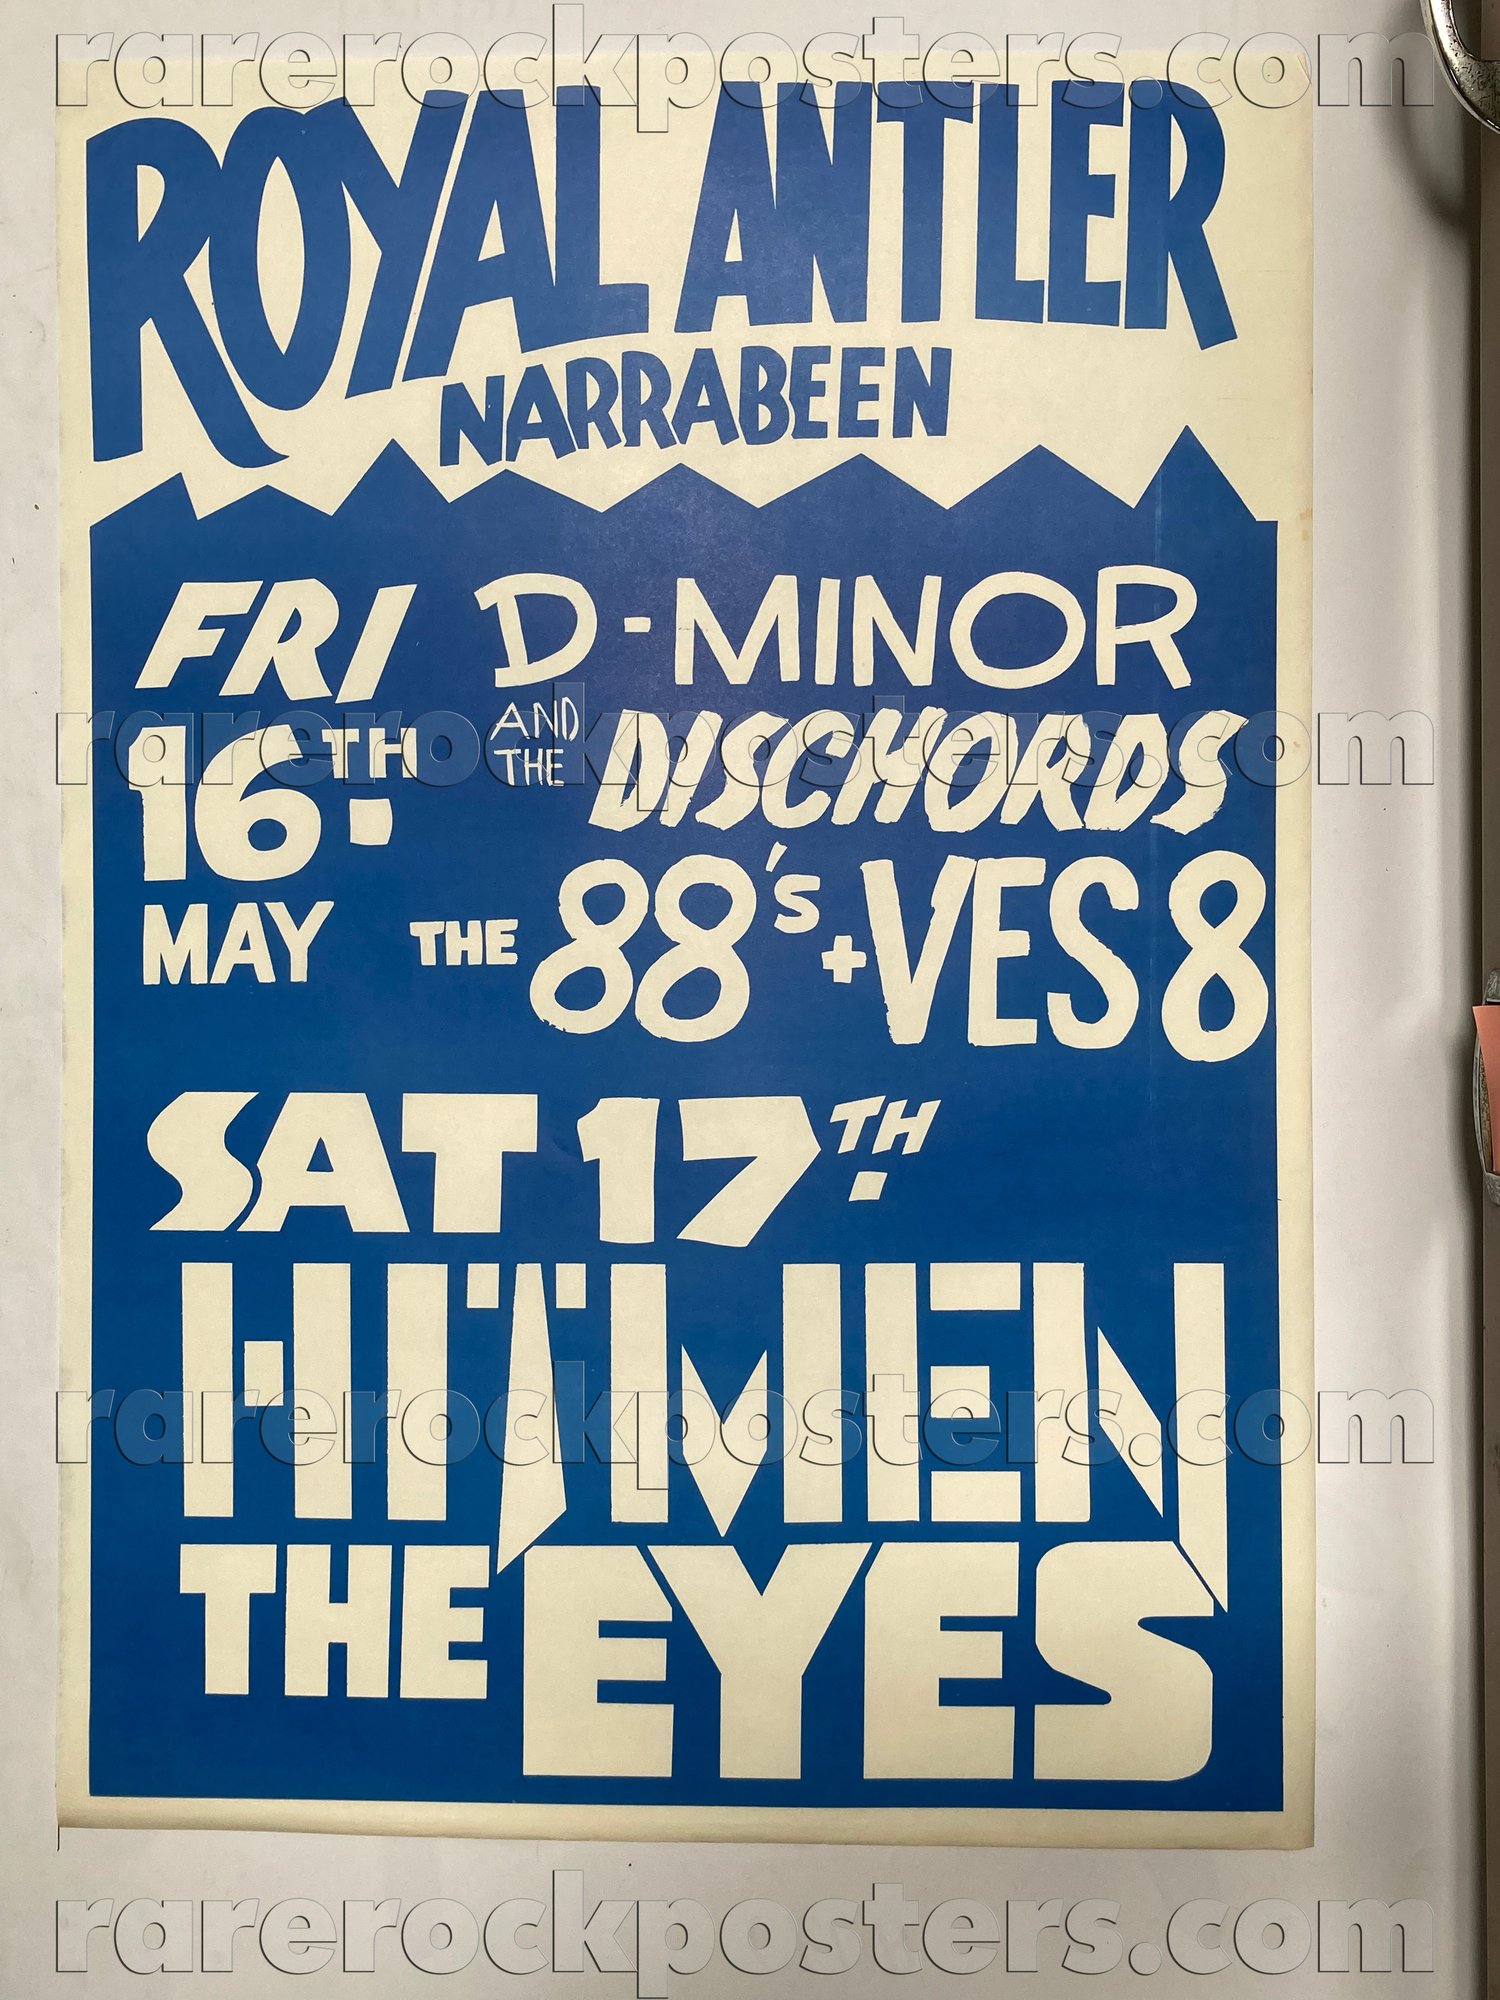 HITMEN / THE EYES / DEE MINOR / VES 8 / 88'S~ ORIGINAL 1980 AUST GIG POSTER ~ ROYAL ANTLER NARRABEEN